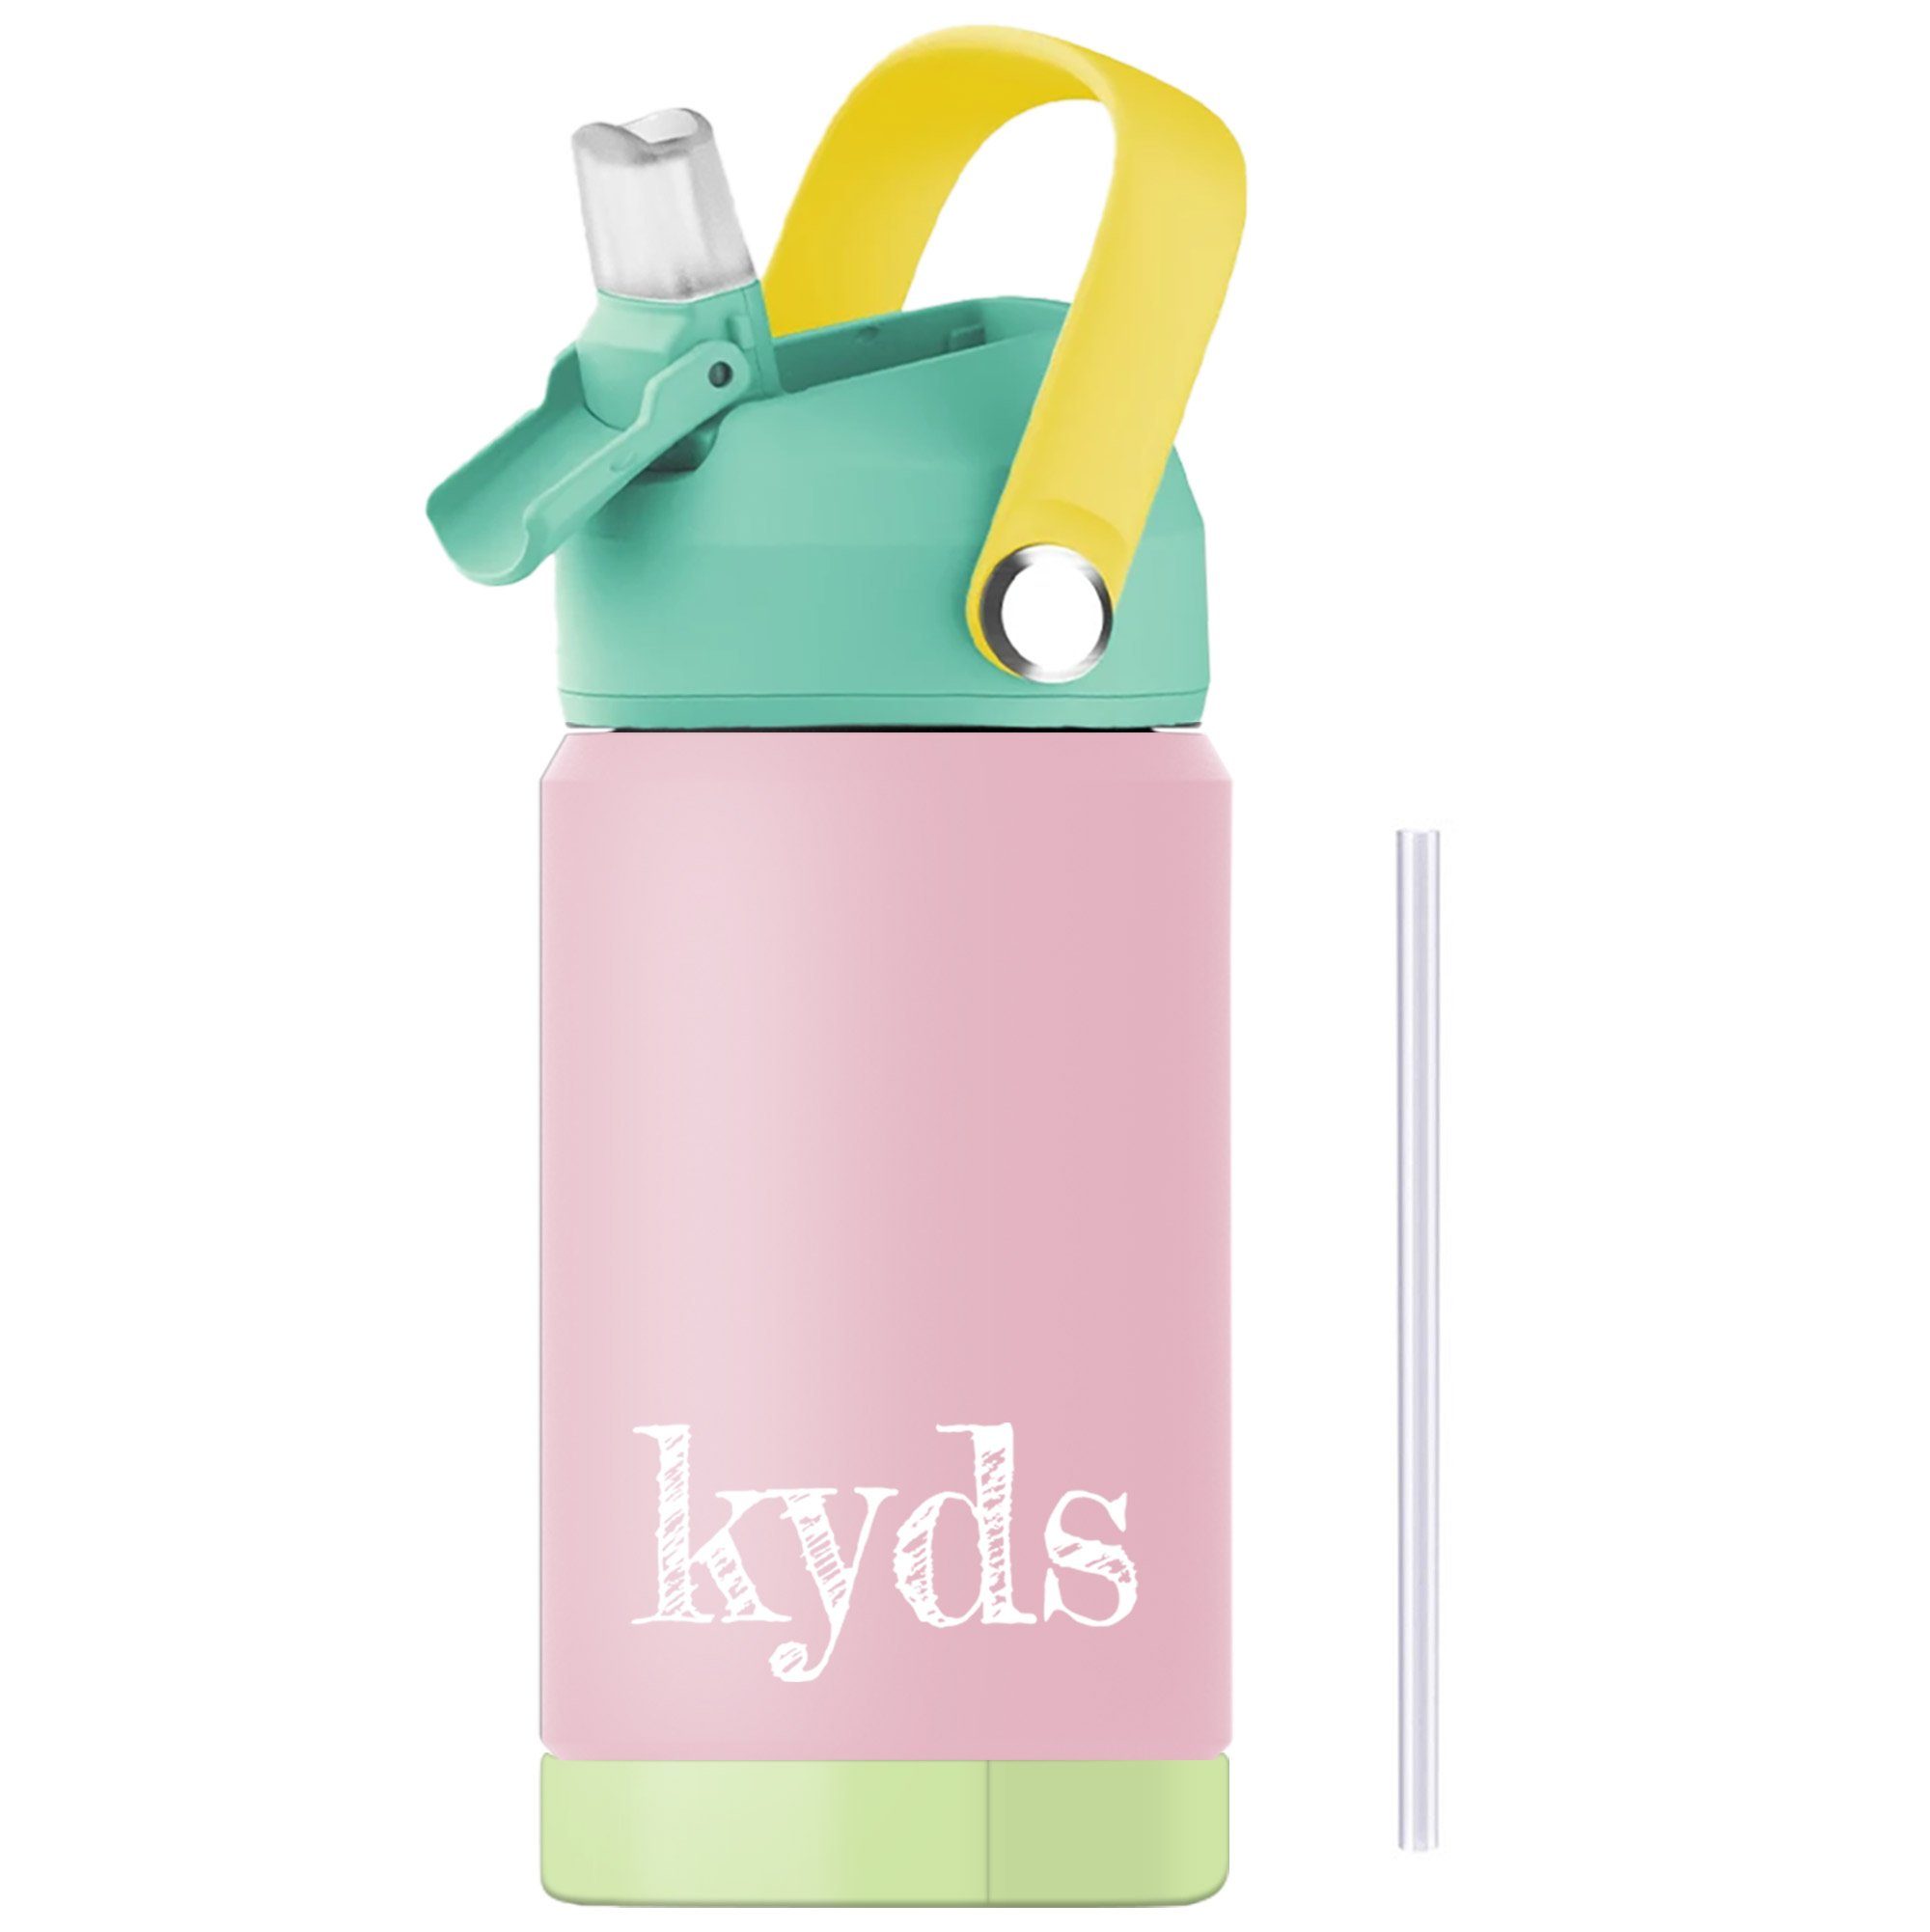 kyds Isolierflasche Trinkflasche, auslaufsicher, BPA-frei, Edelstahl, Inhalt 350ml oder Inhalt 500ml Rosa/Light Green